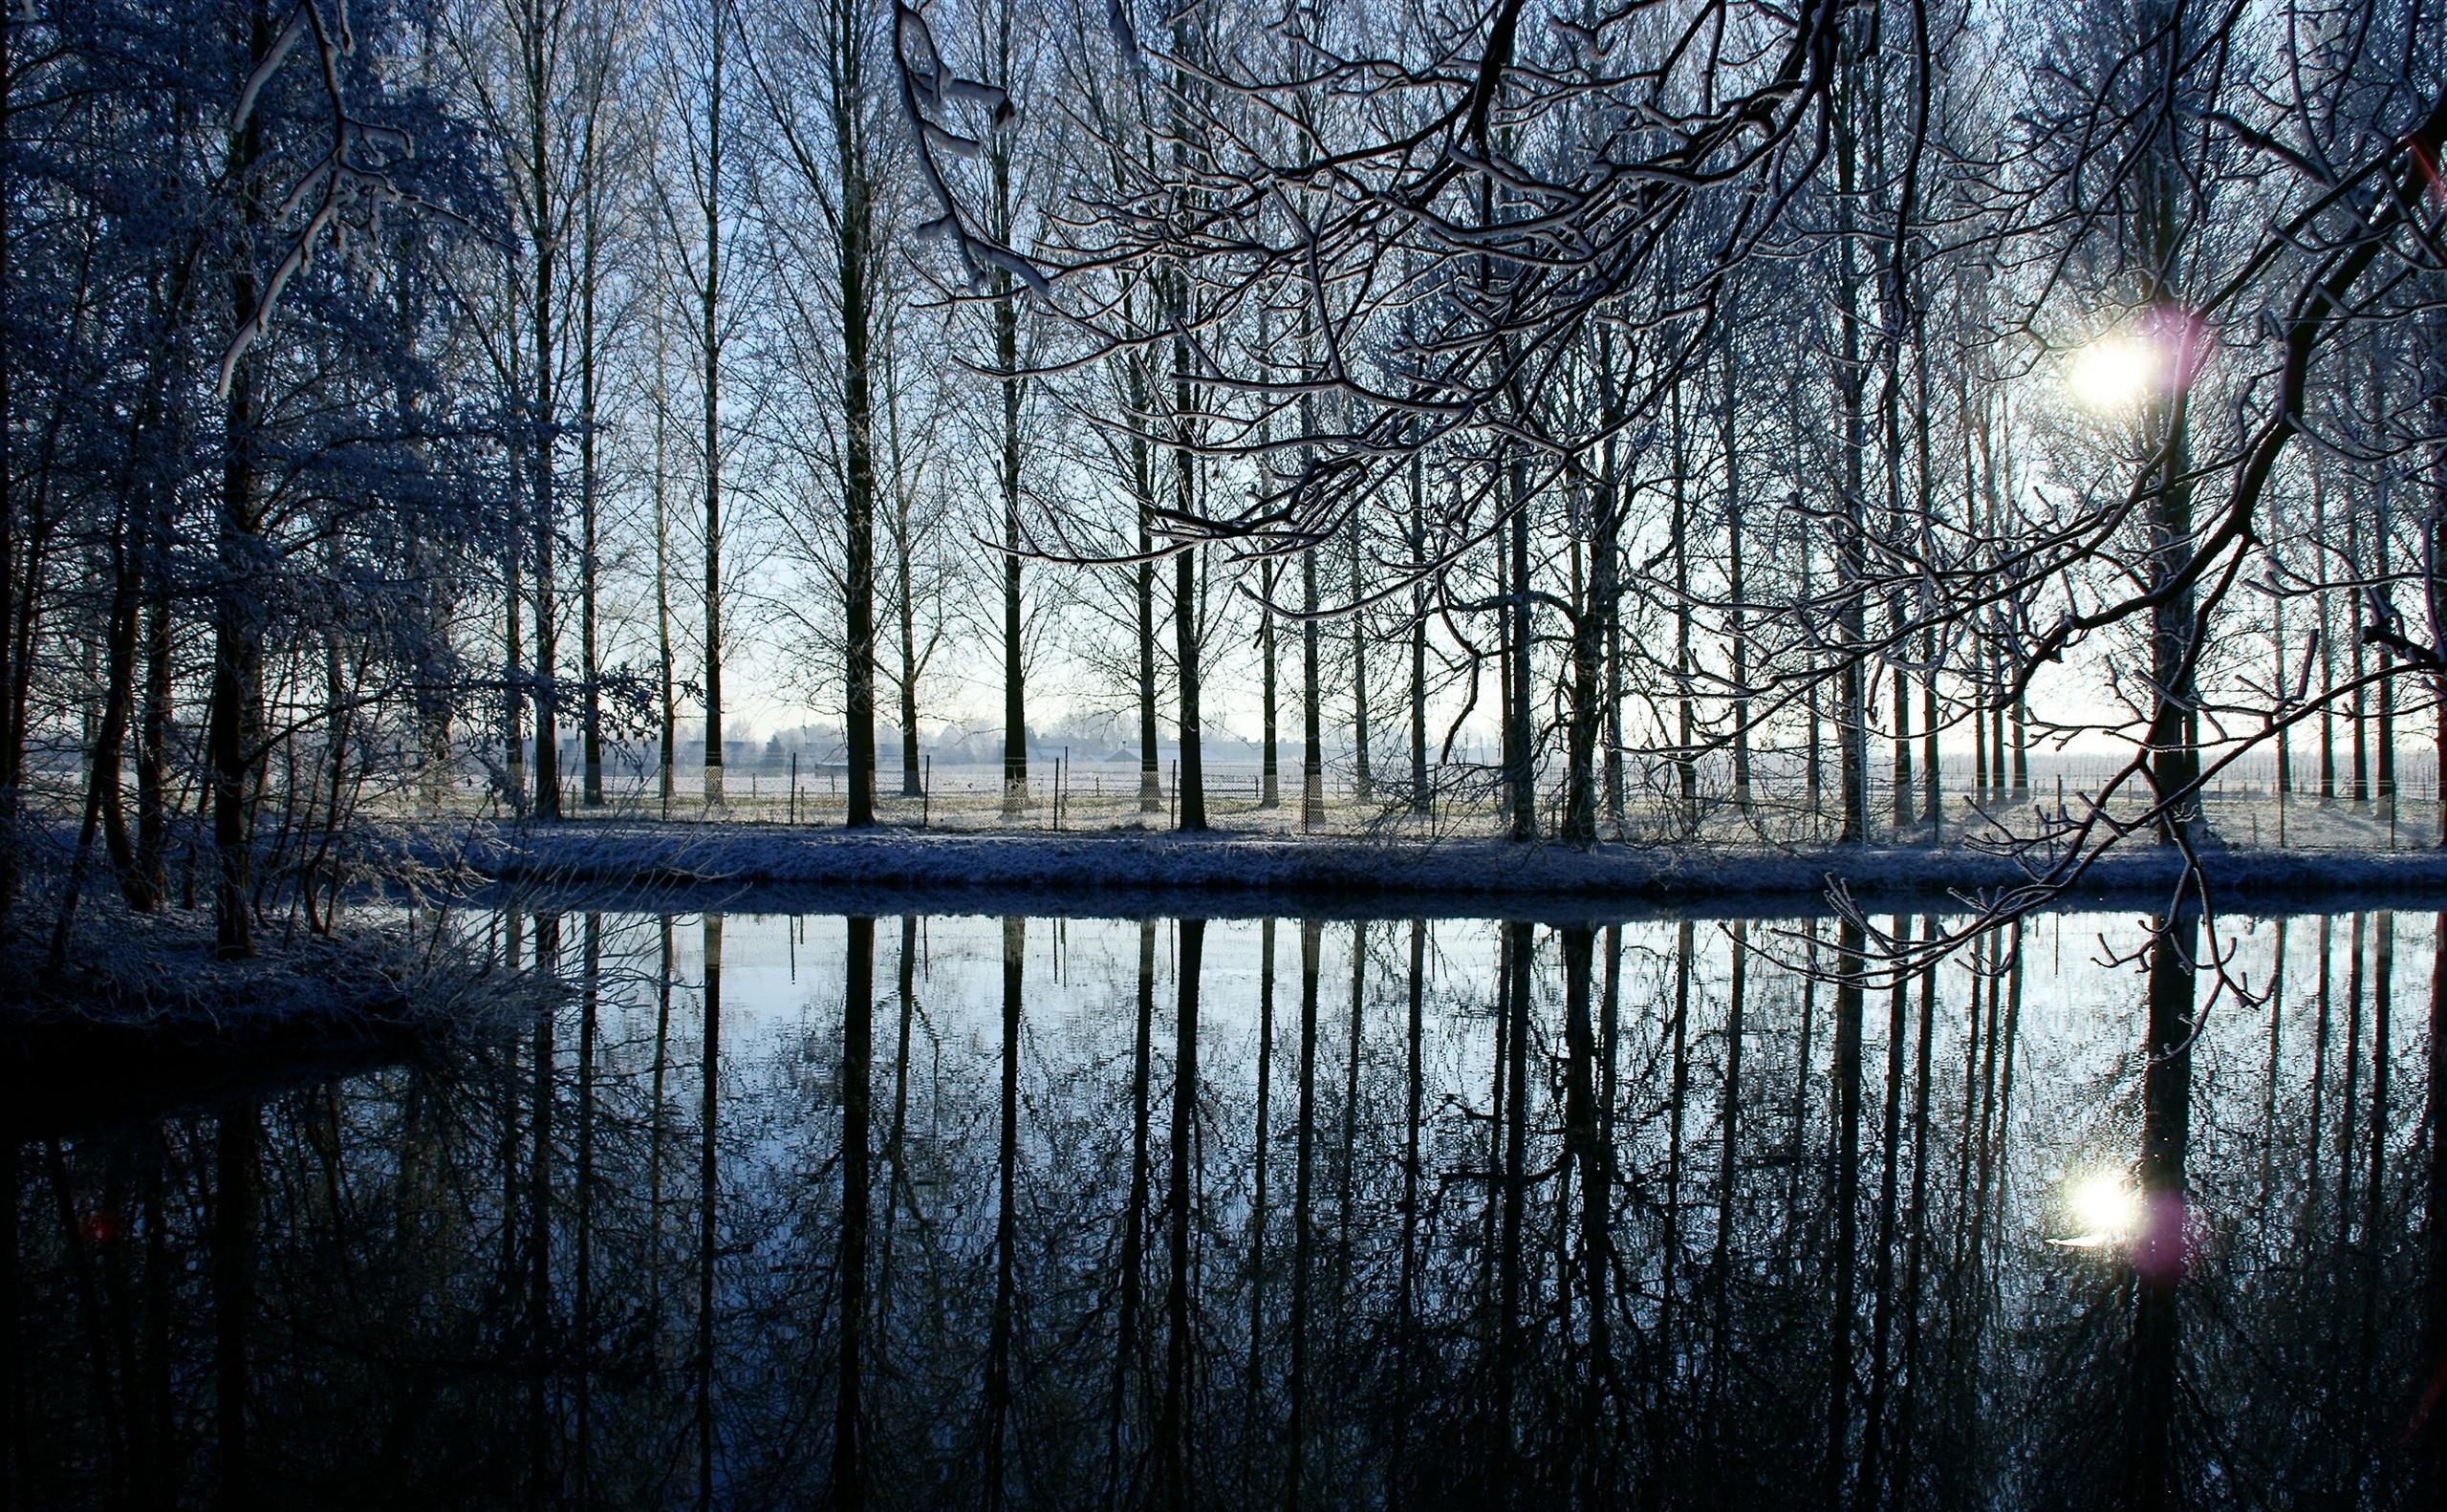 Reflection In Kromme Rijn River, nature walpaper, Landscapes